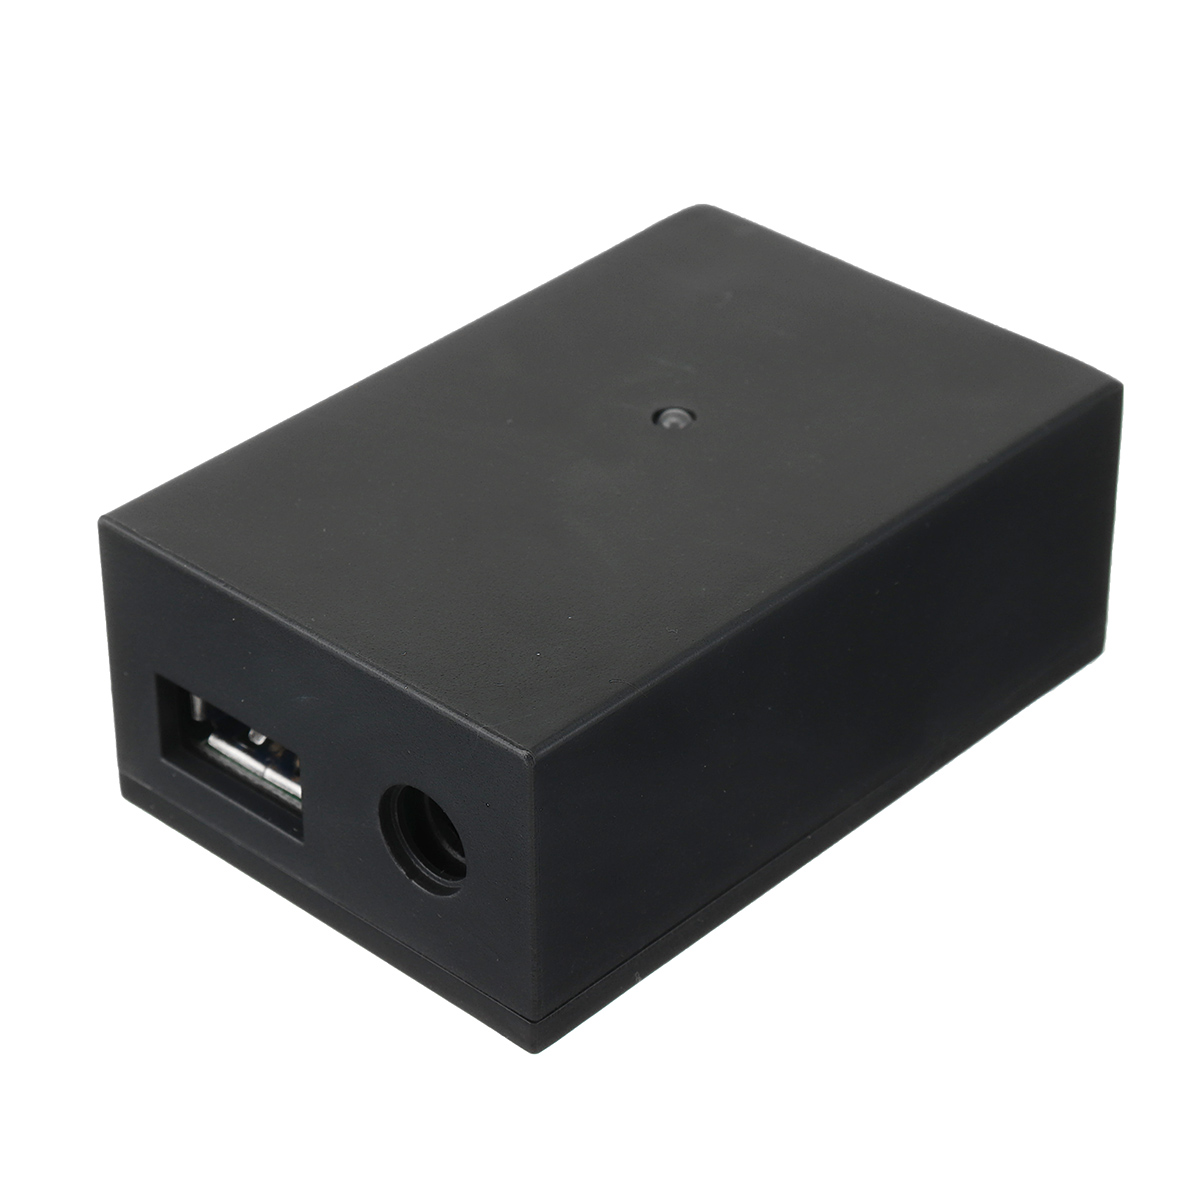 Power-20-Power-AC-Adapter-USEUAU-Plug-PC-Development-Kit-For-Xbox-One-SX-Kinect-1319225-4